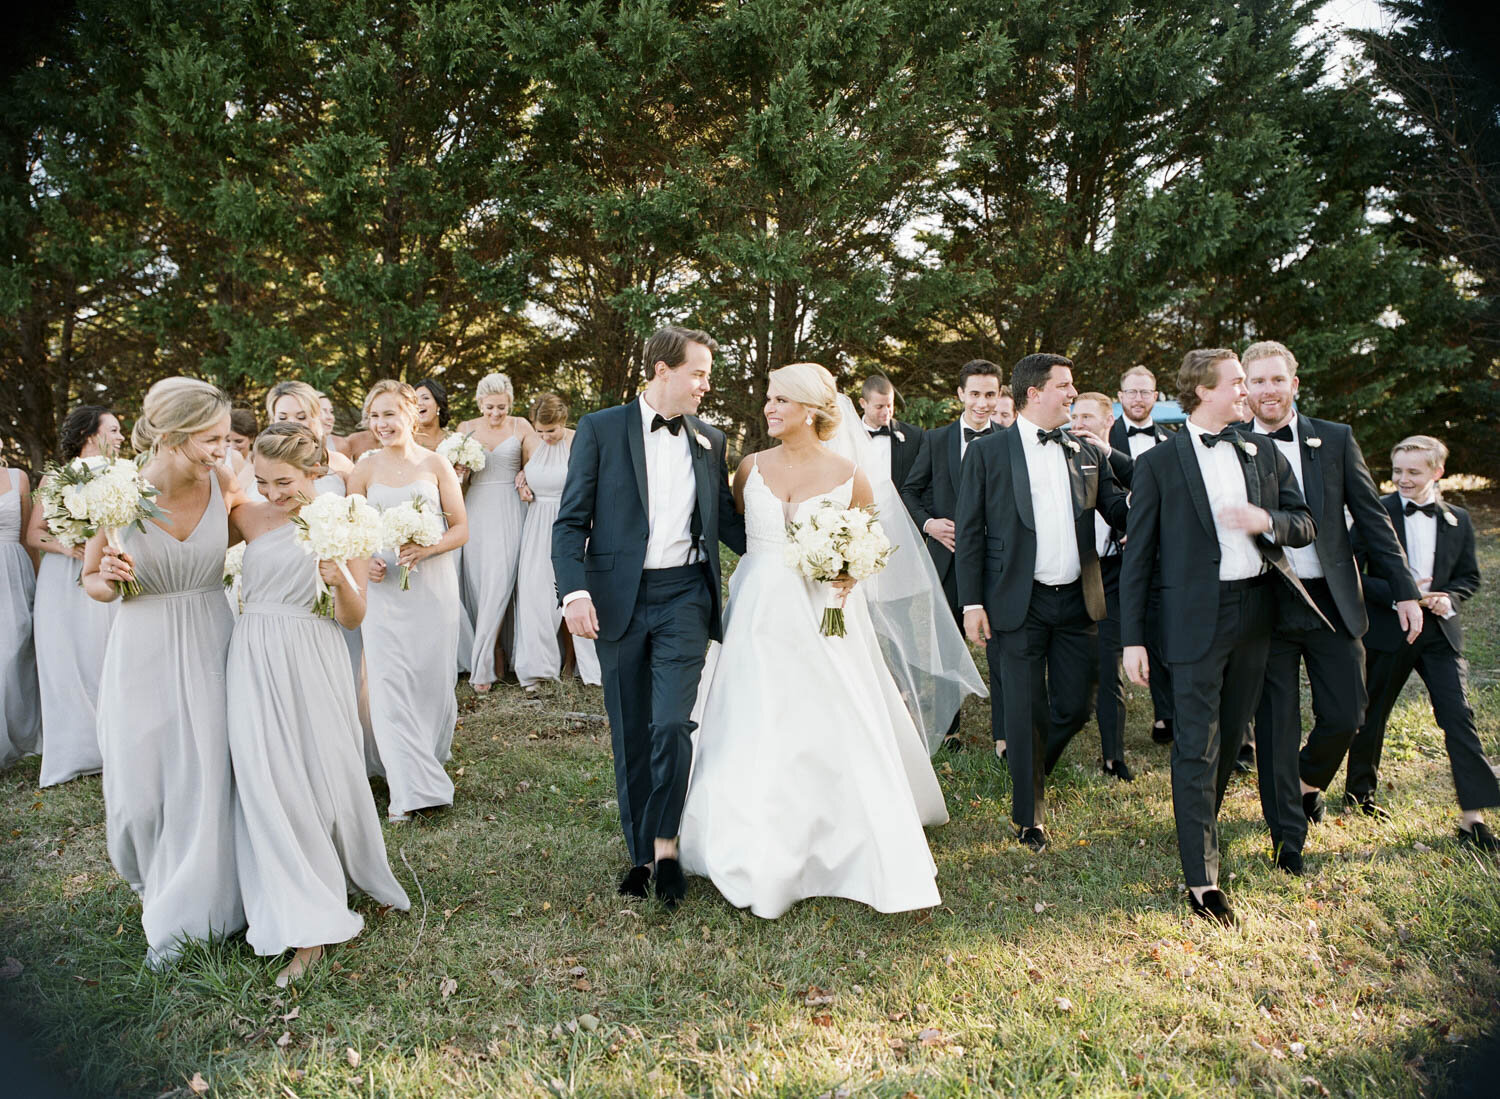 Easternshore-wedding-Lisa-Blume-Photography-6.jpg